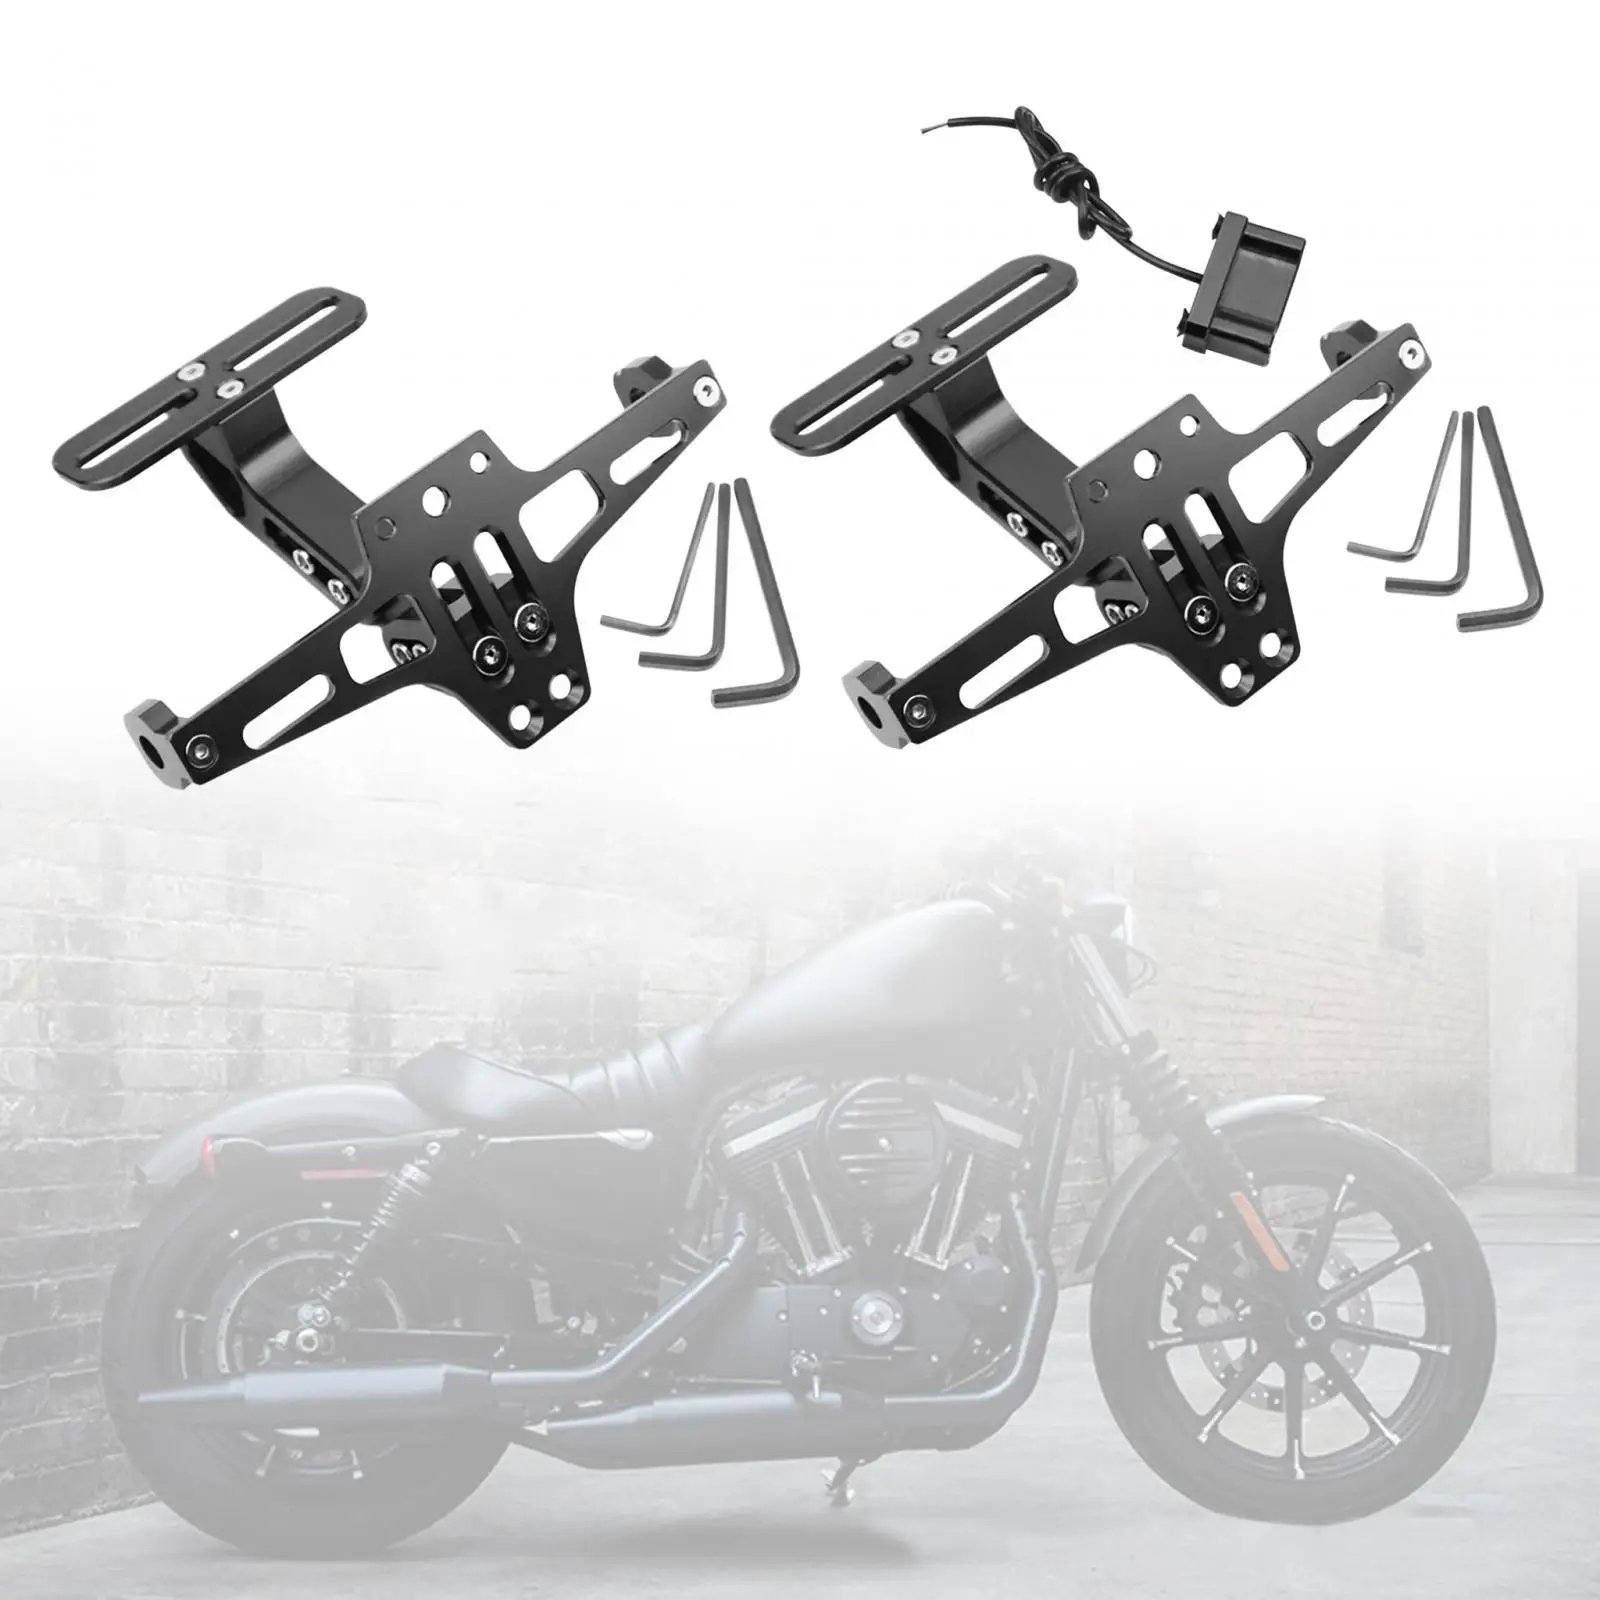 Motorcycle License Plate Bracket Universal Sturdy Motorbike Accessories High